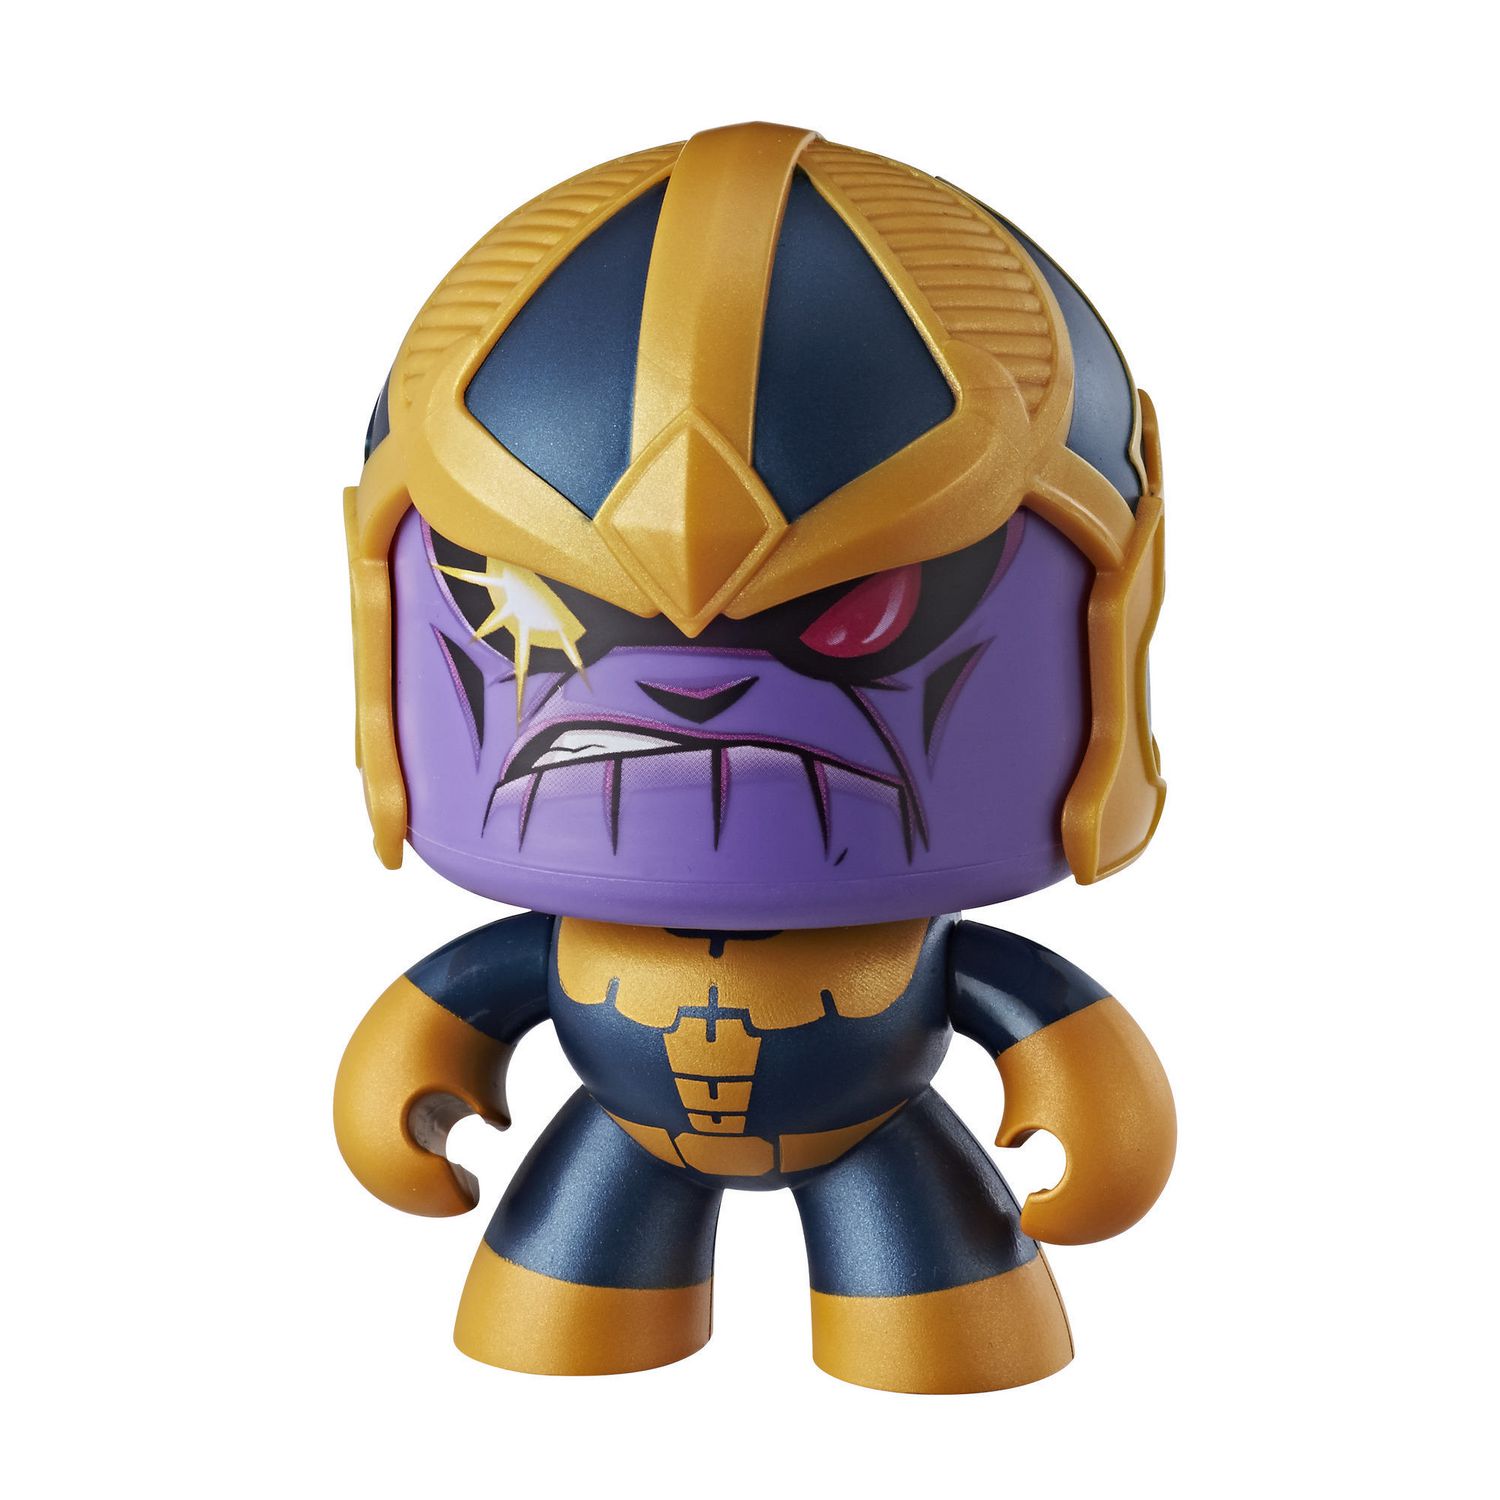 Marvel Mighty Muggs Thanos #12 | Walmart Canada